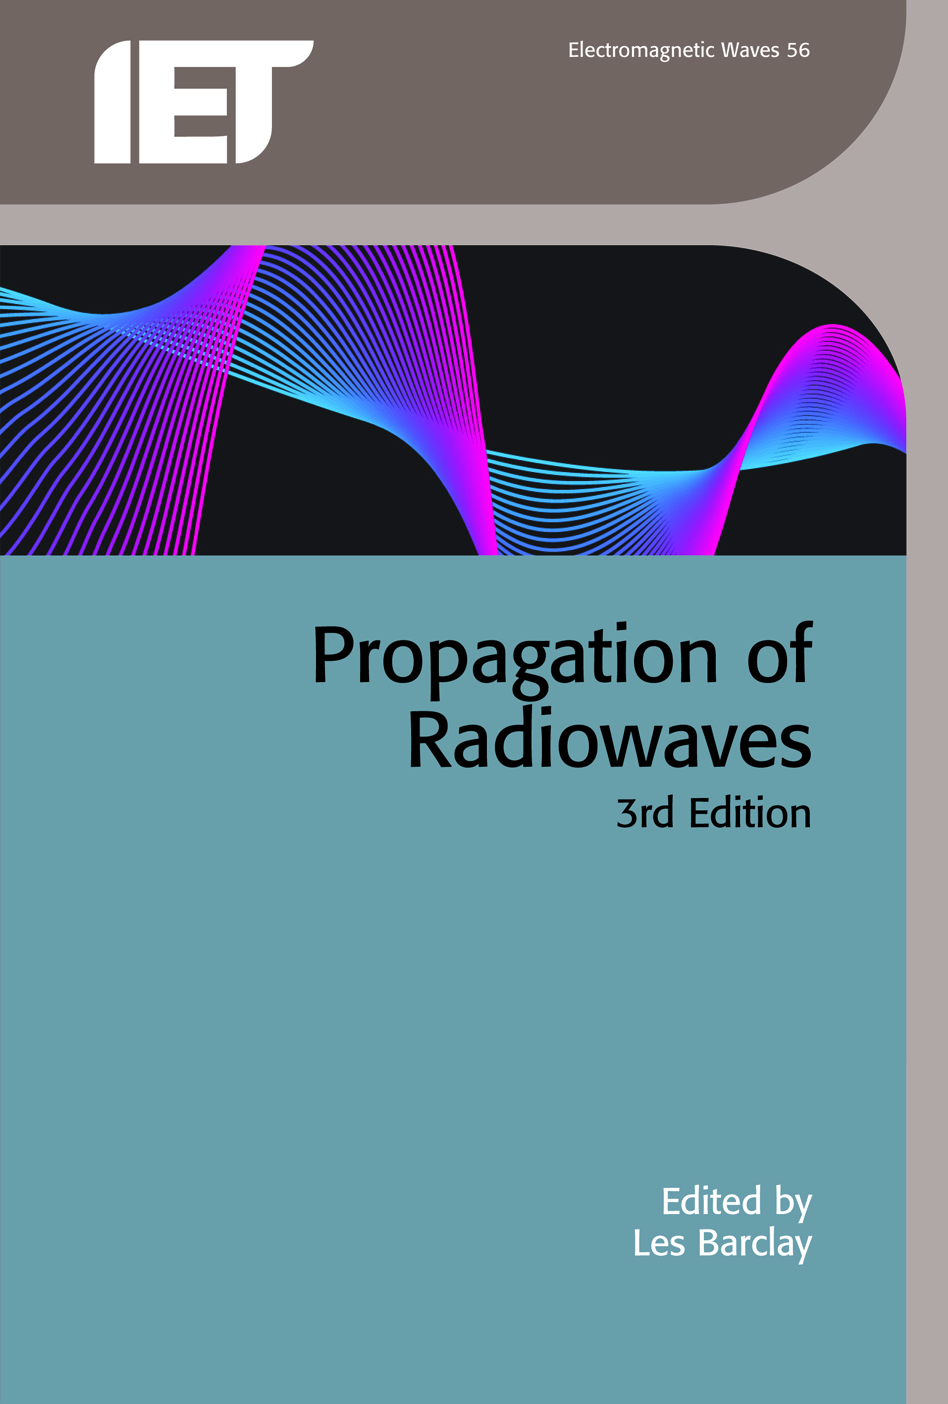 Propagation of Radiowaves, 3rd Edition